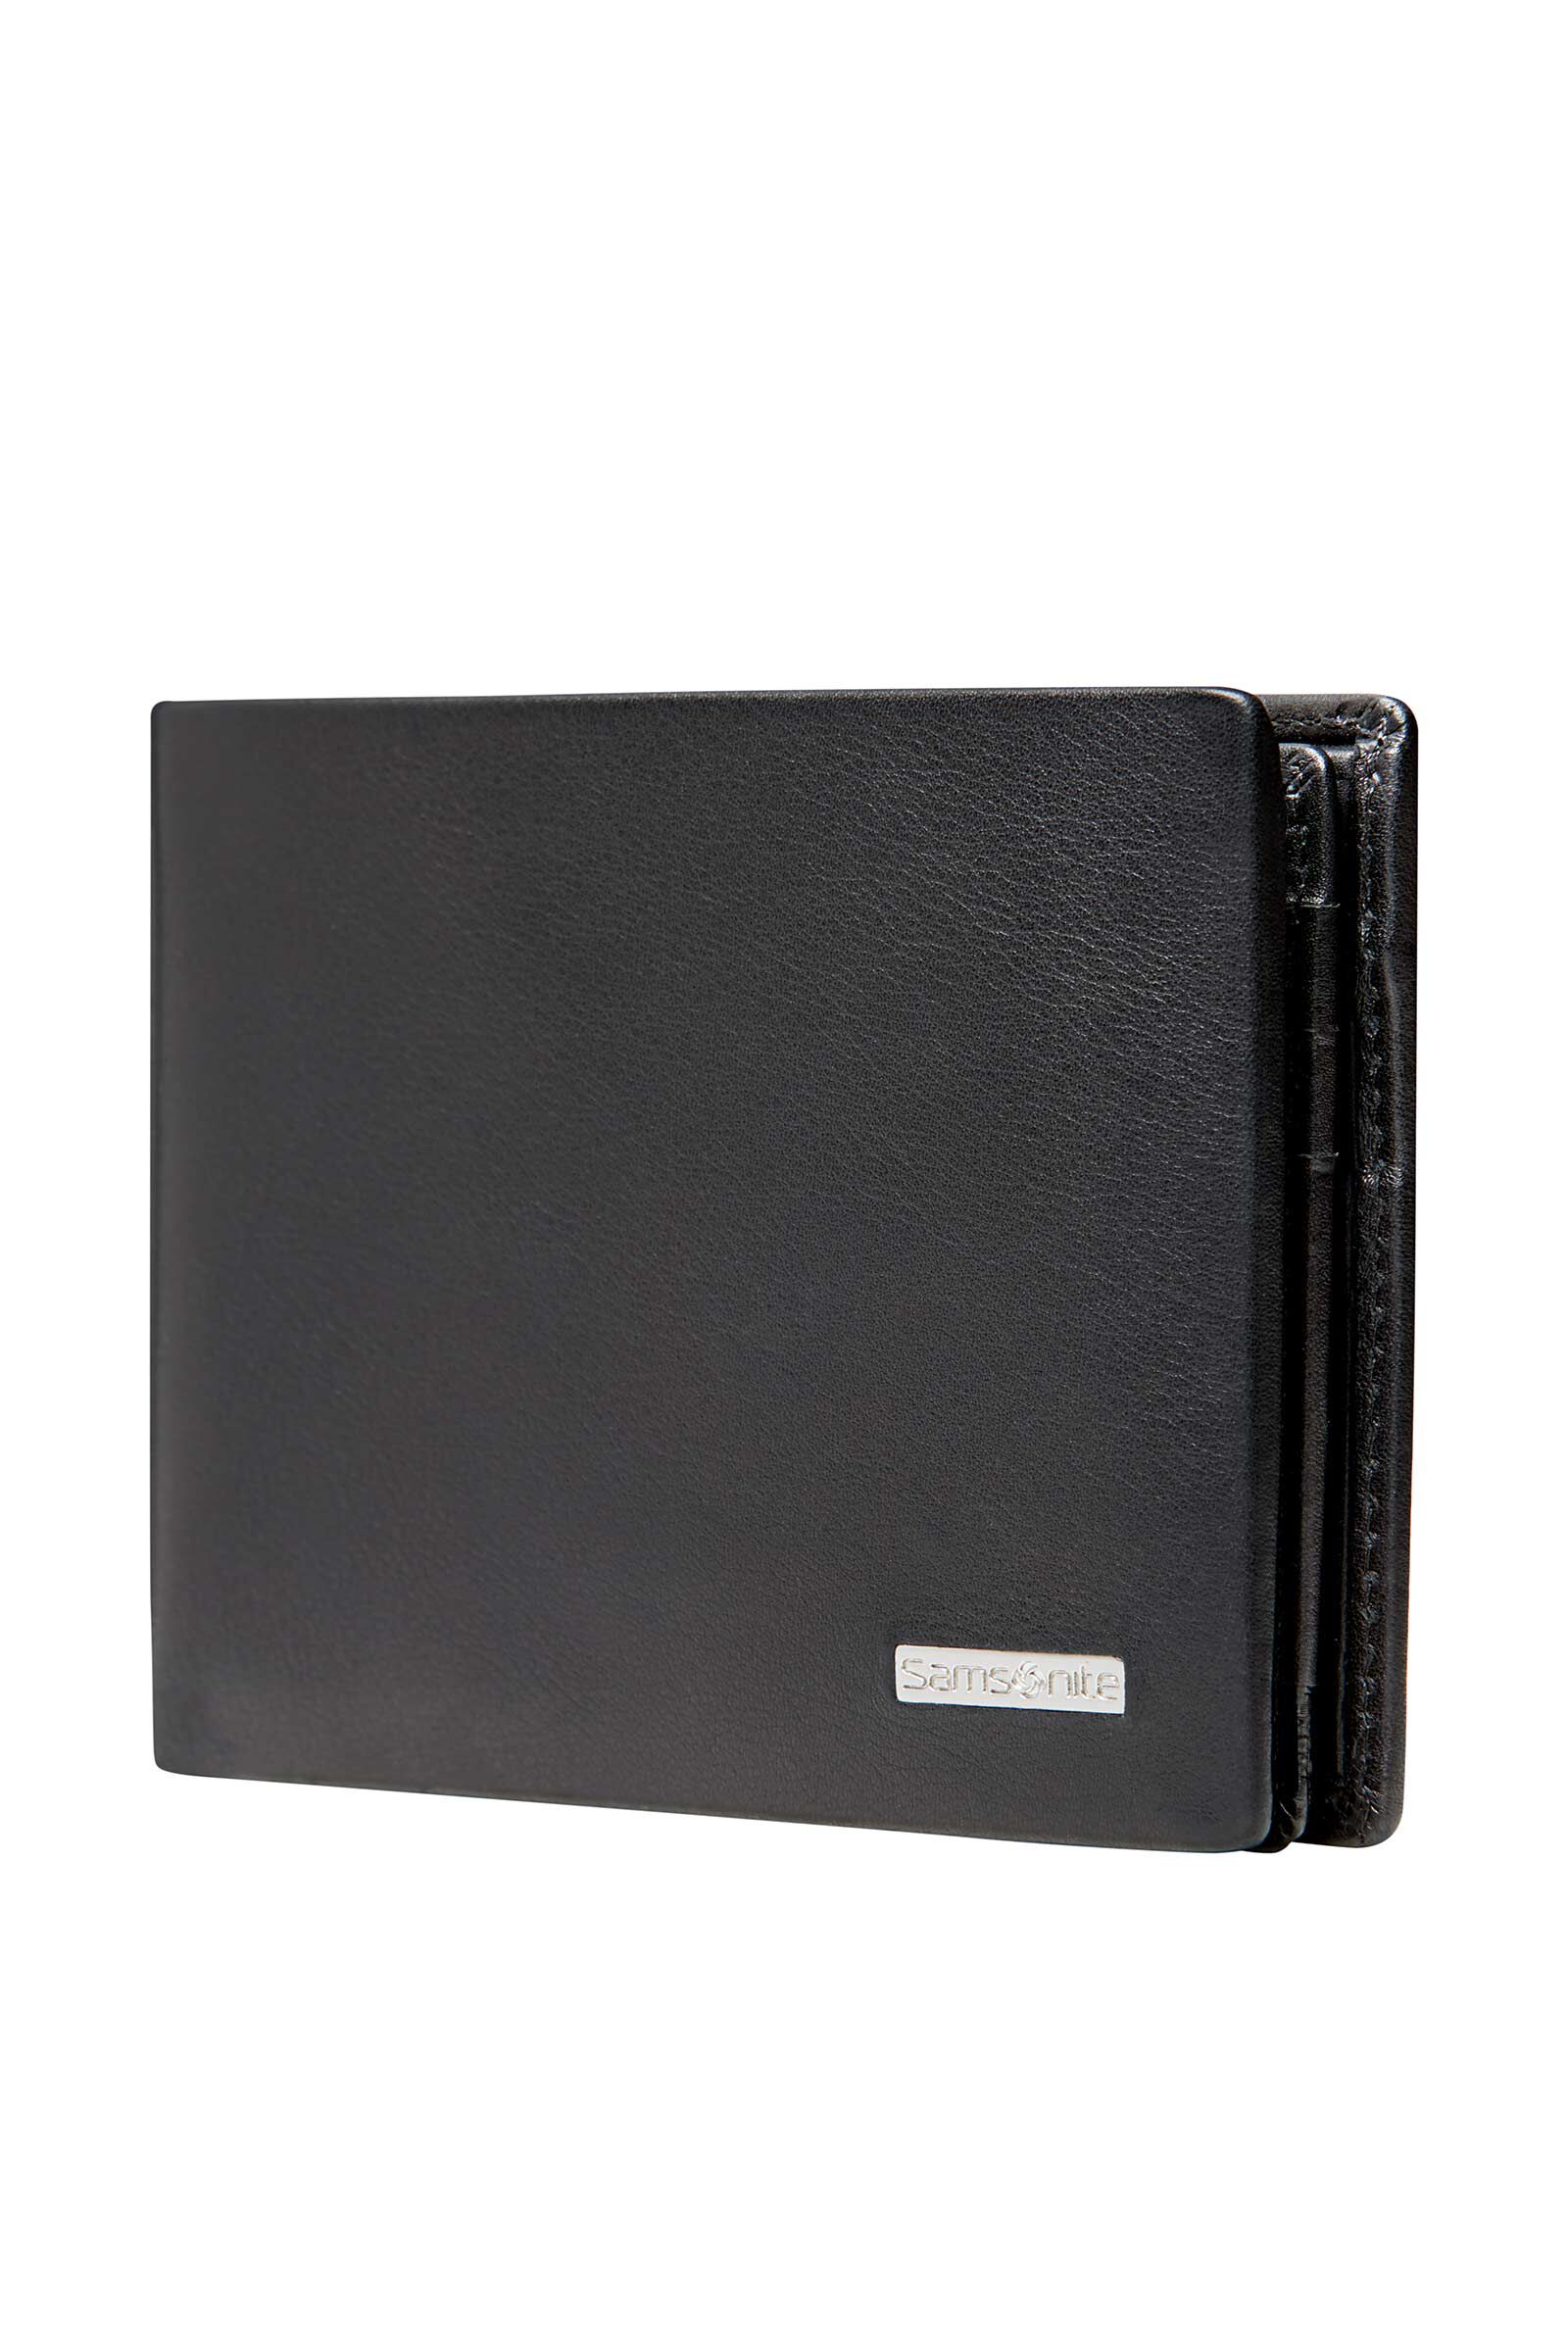 Amazon.com: Samsonite Men's Travel Accessories Wallet, Noir (Black), 13 x 1  x 9.7 cm : Clothing, Shoes & Jewelry